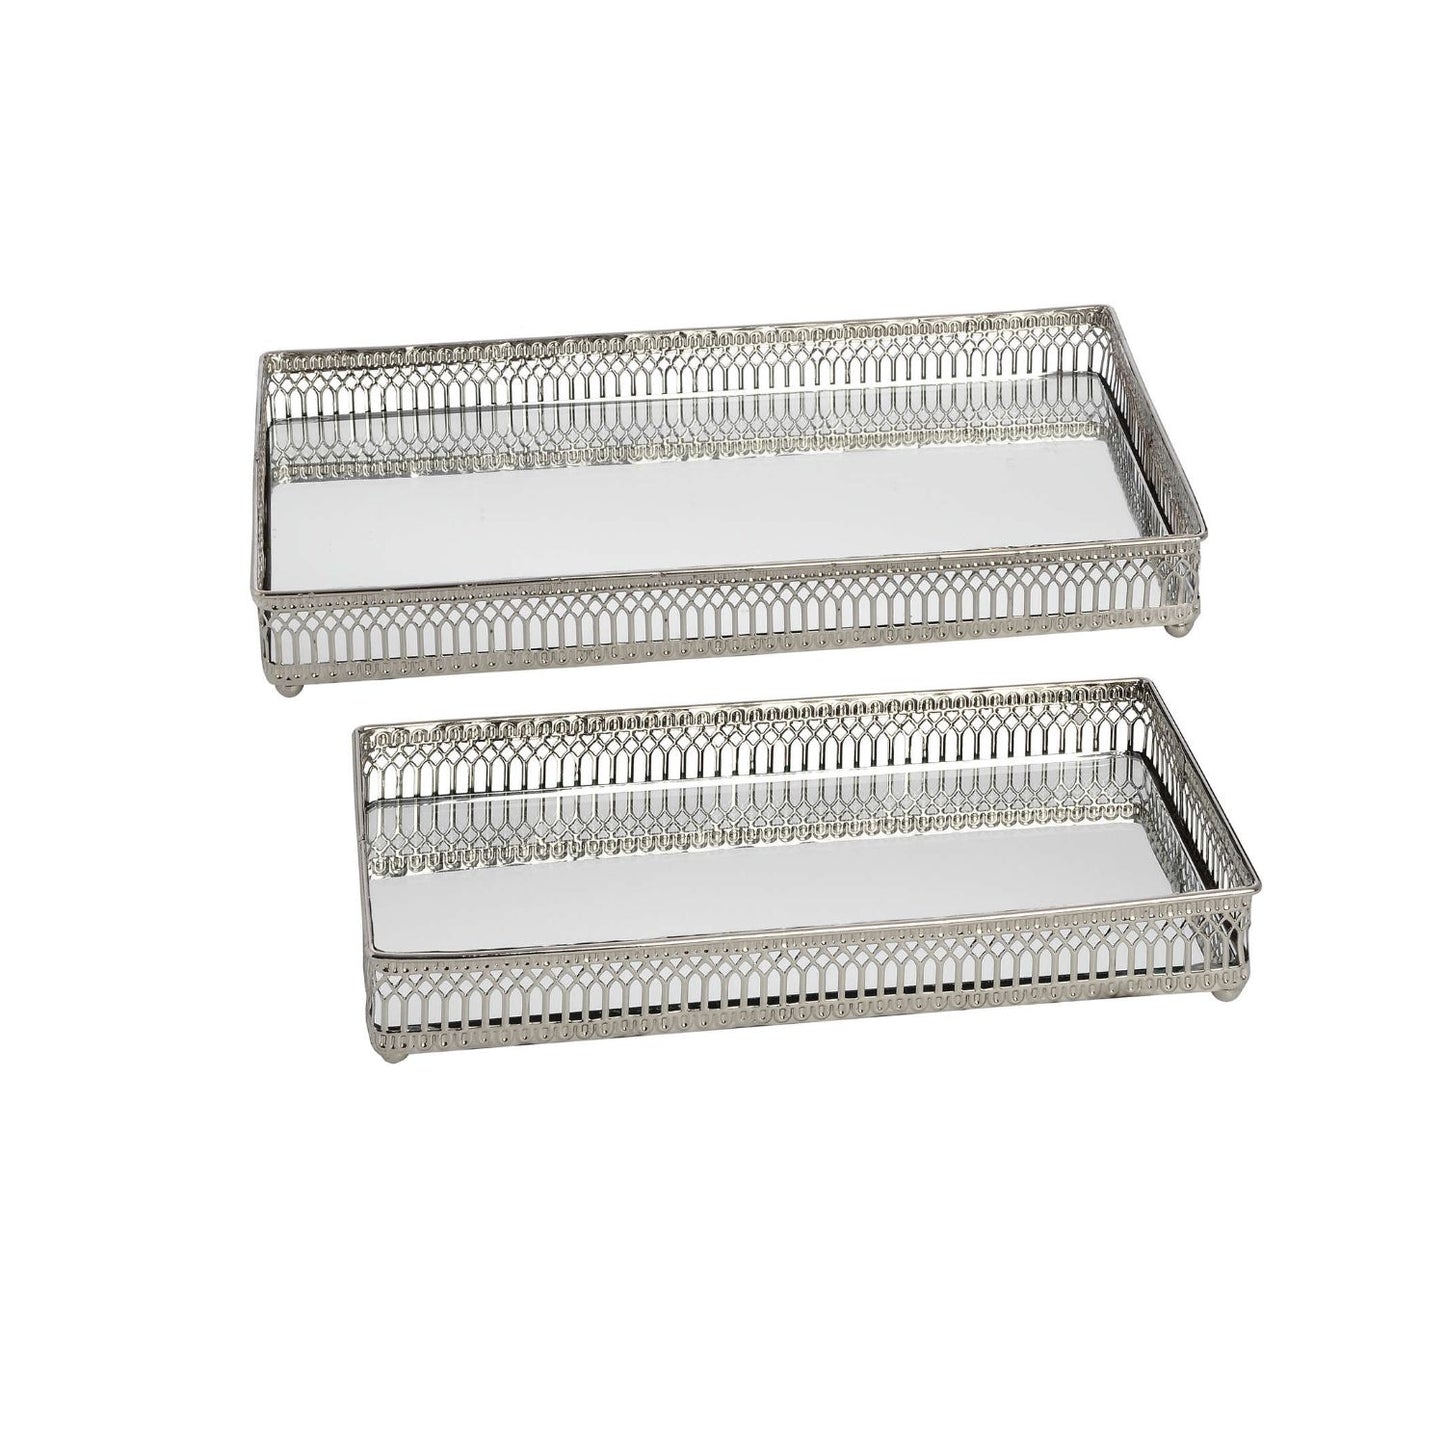 Pair of Tea trays, silver nickel rectangular design